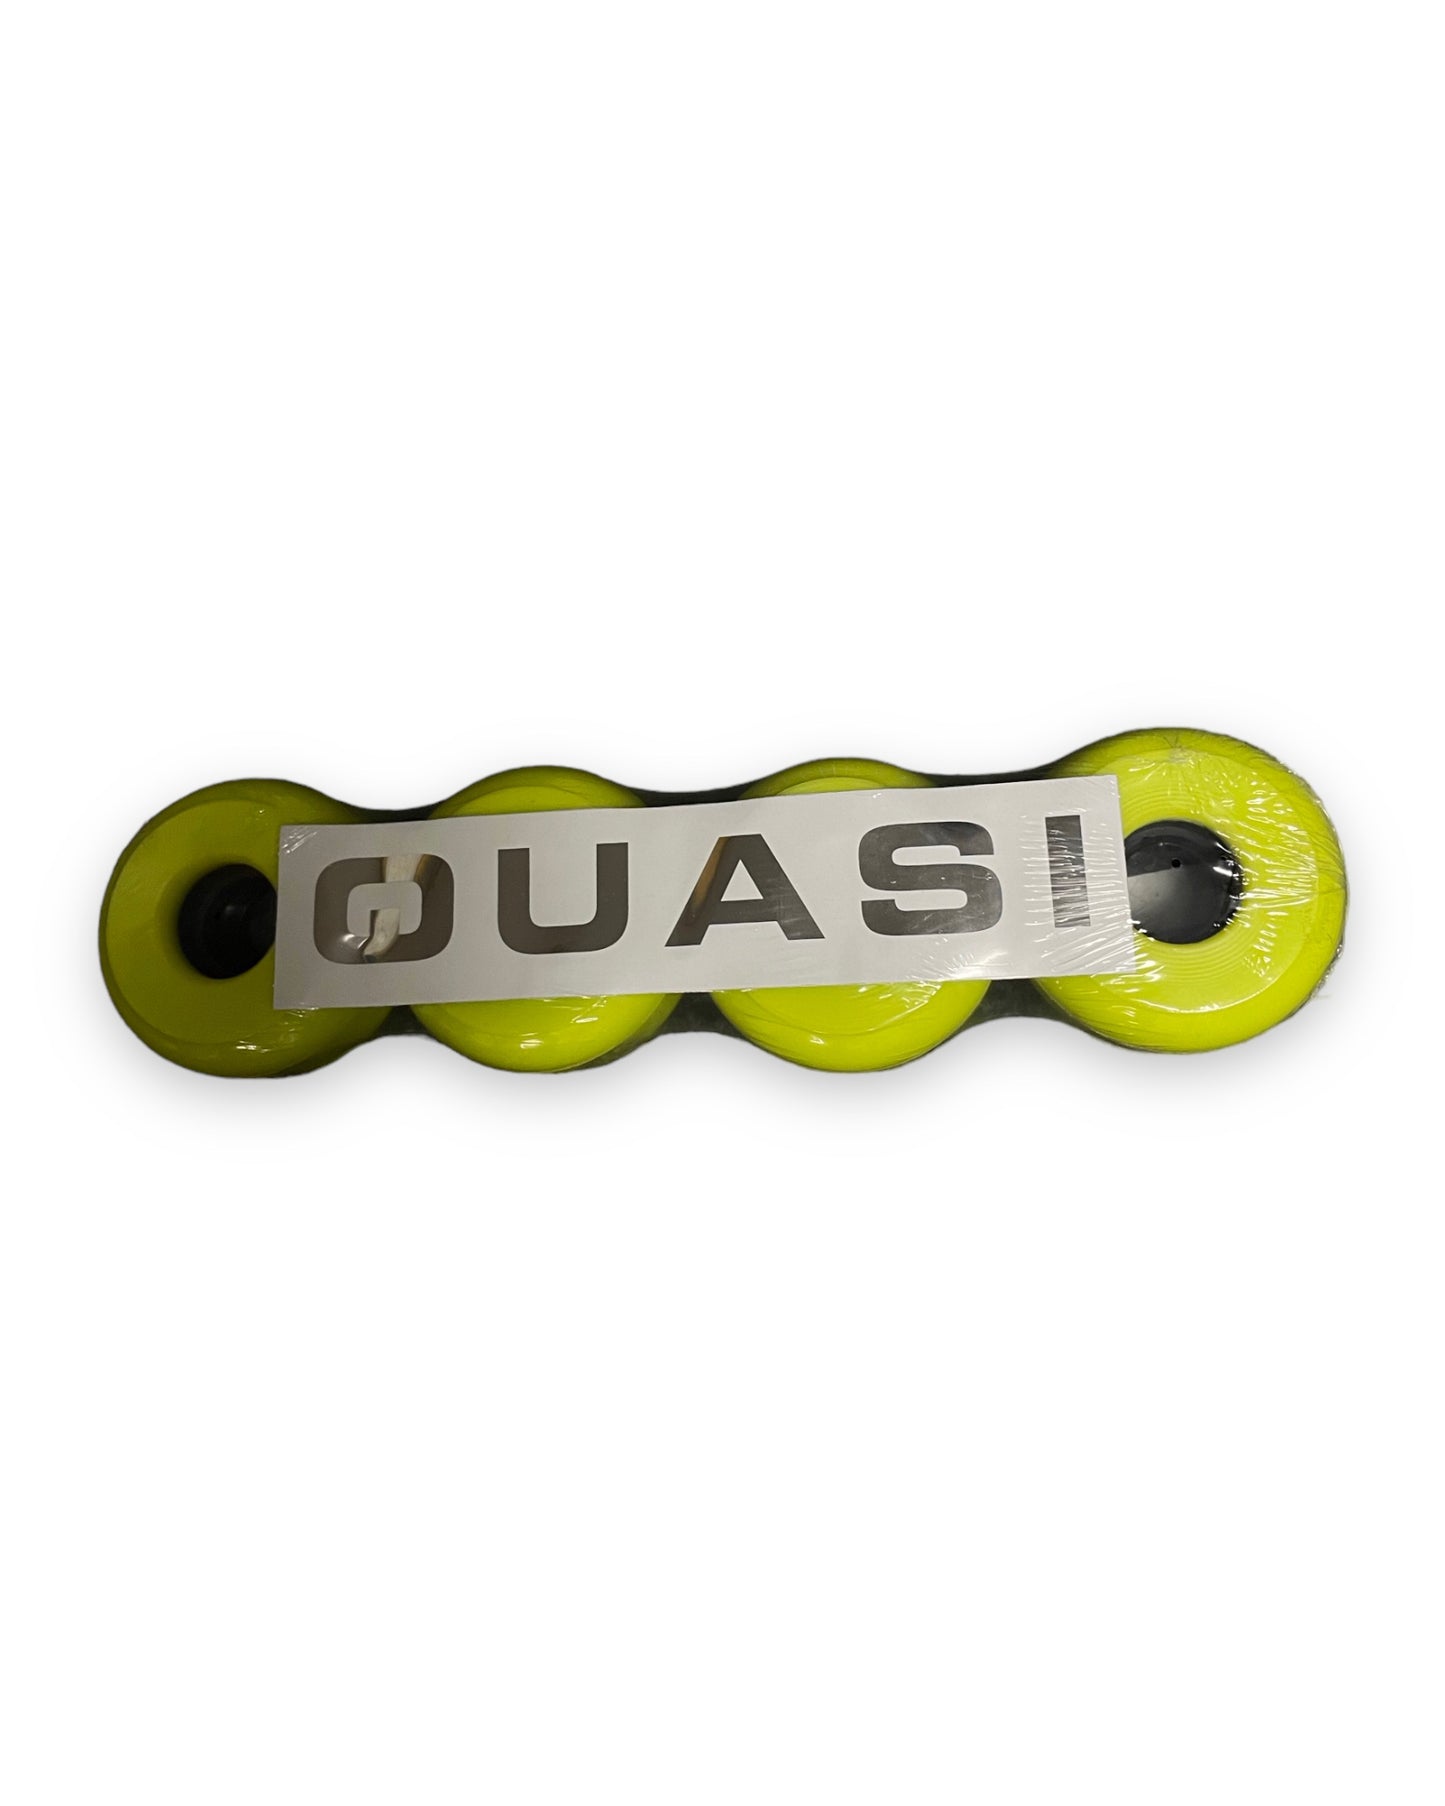 QUASI | Stoner Hybrid Wheel | 56mm White Neon